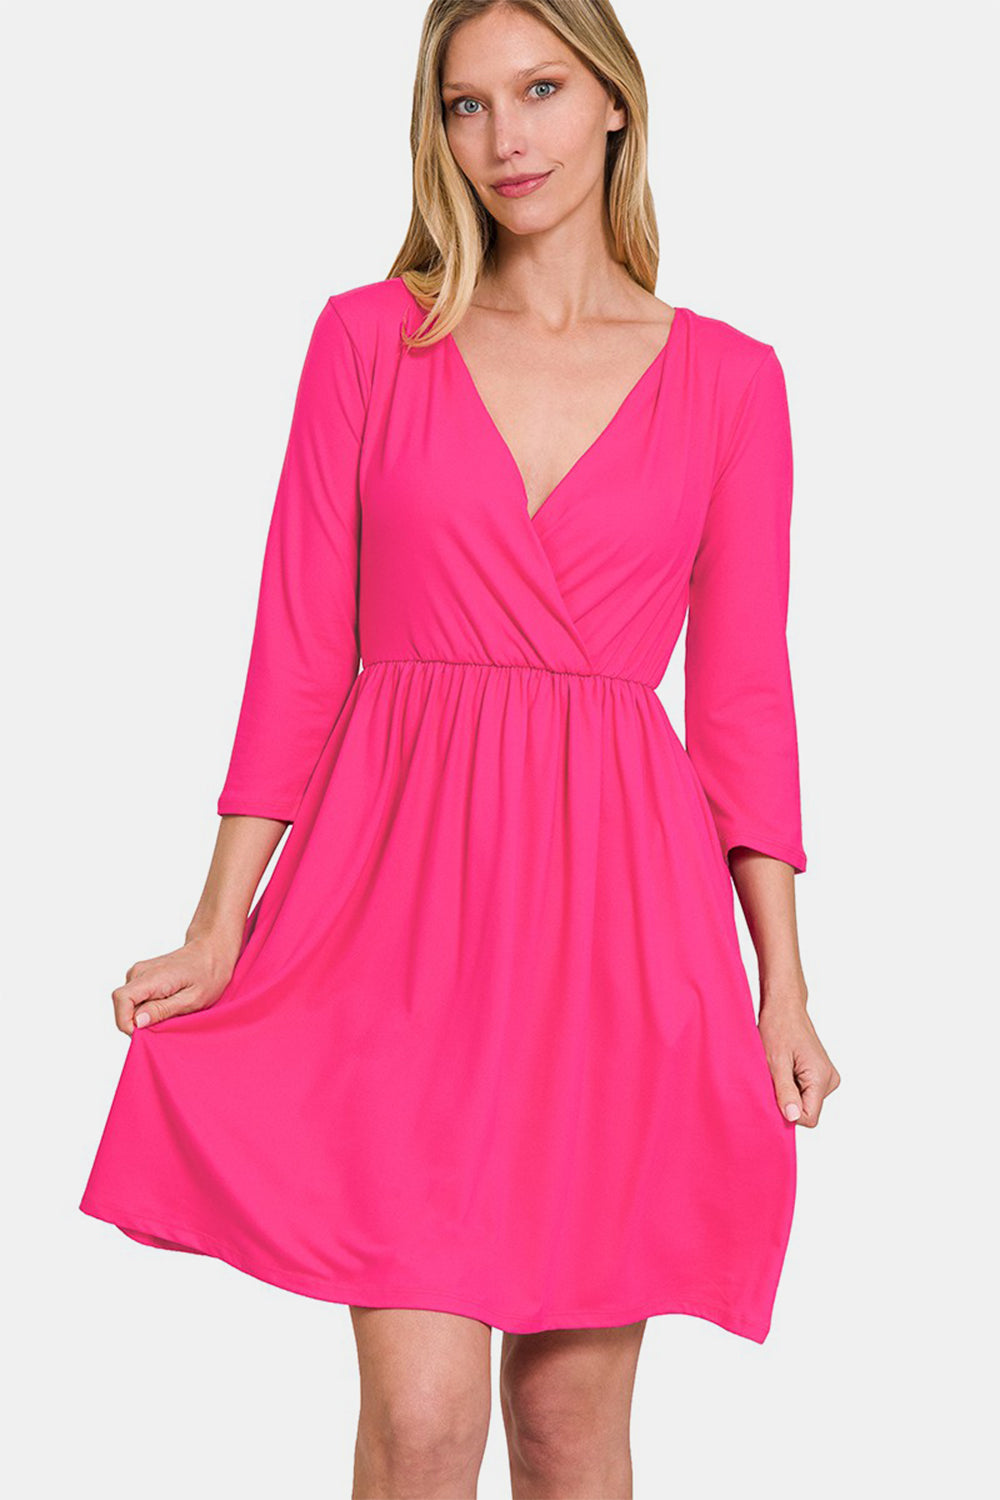 Zenana Three-Quarter Sleeve Surplice Dress with Pockets Hot Pink Trendsi